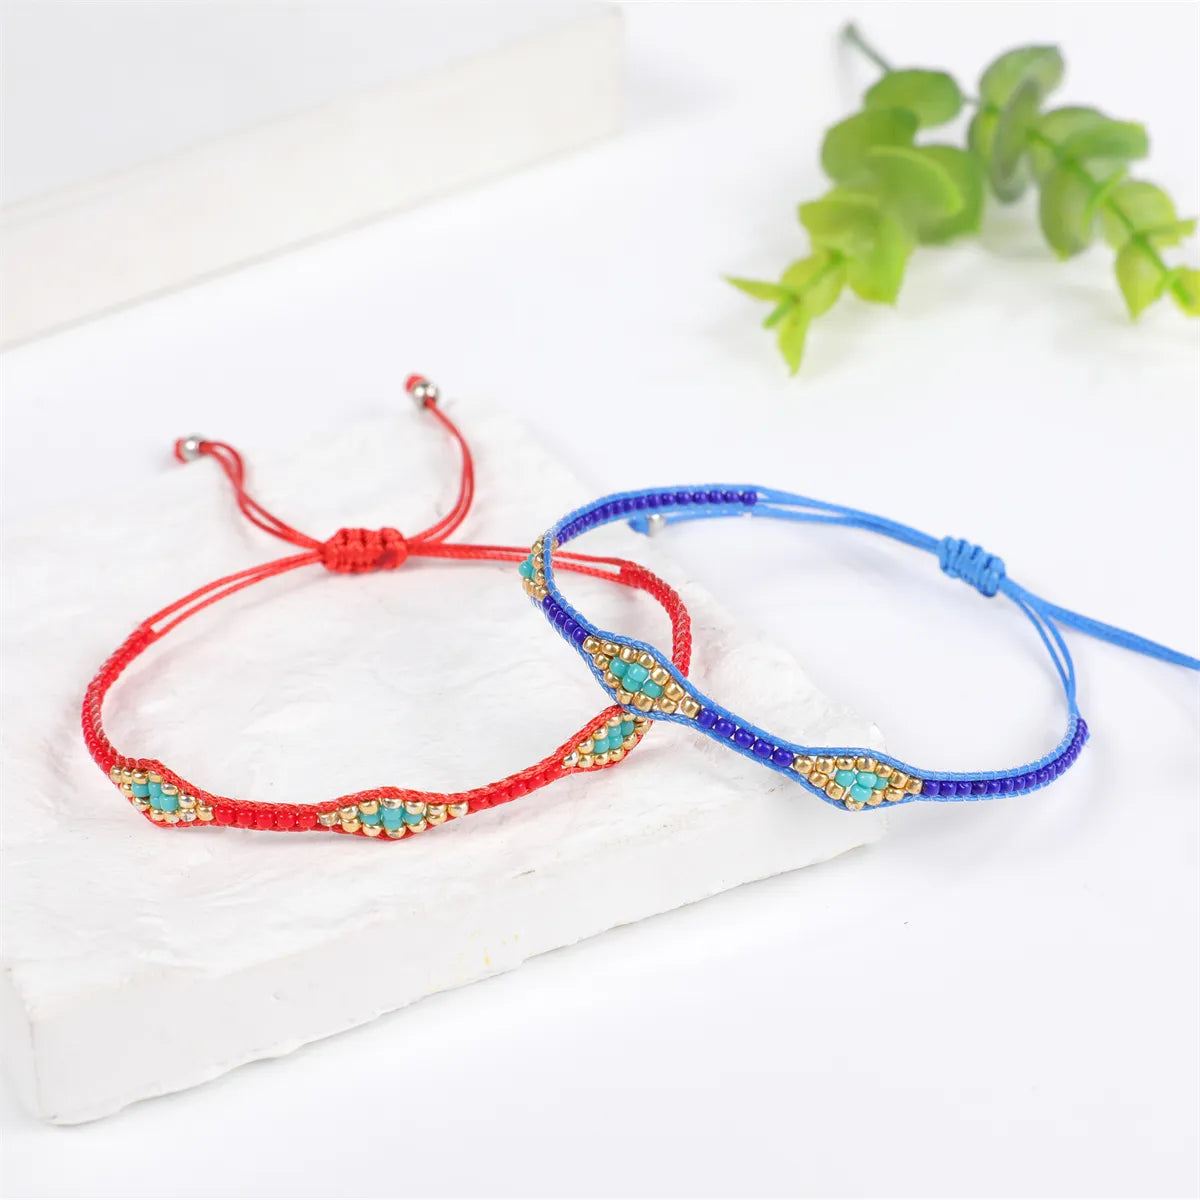 Fashion Seed Beads Bracelet for Women Girls Handmade Braid Adjustable Chain Charm Bracelets&bangle Jewelry